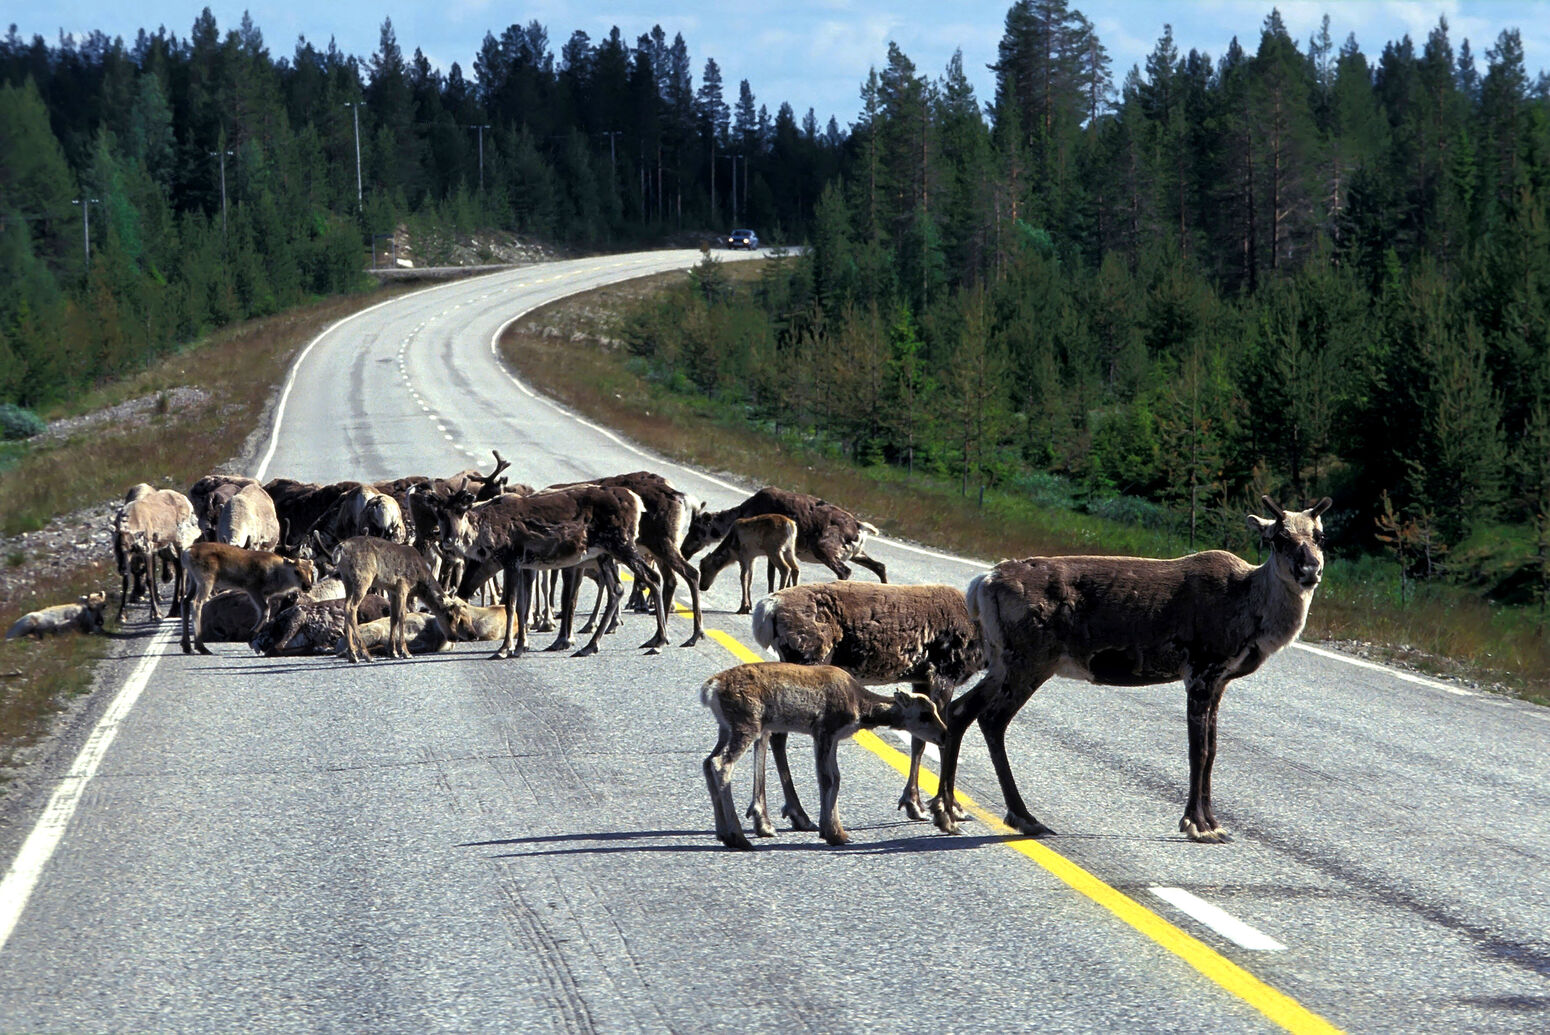 poro poroja tie keskiviiva piennar tienpiennar mets‰ asfaltti, reindeers reindeer road asphalt bitumen axis centreline center l